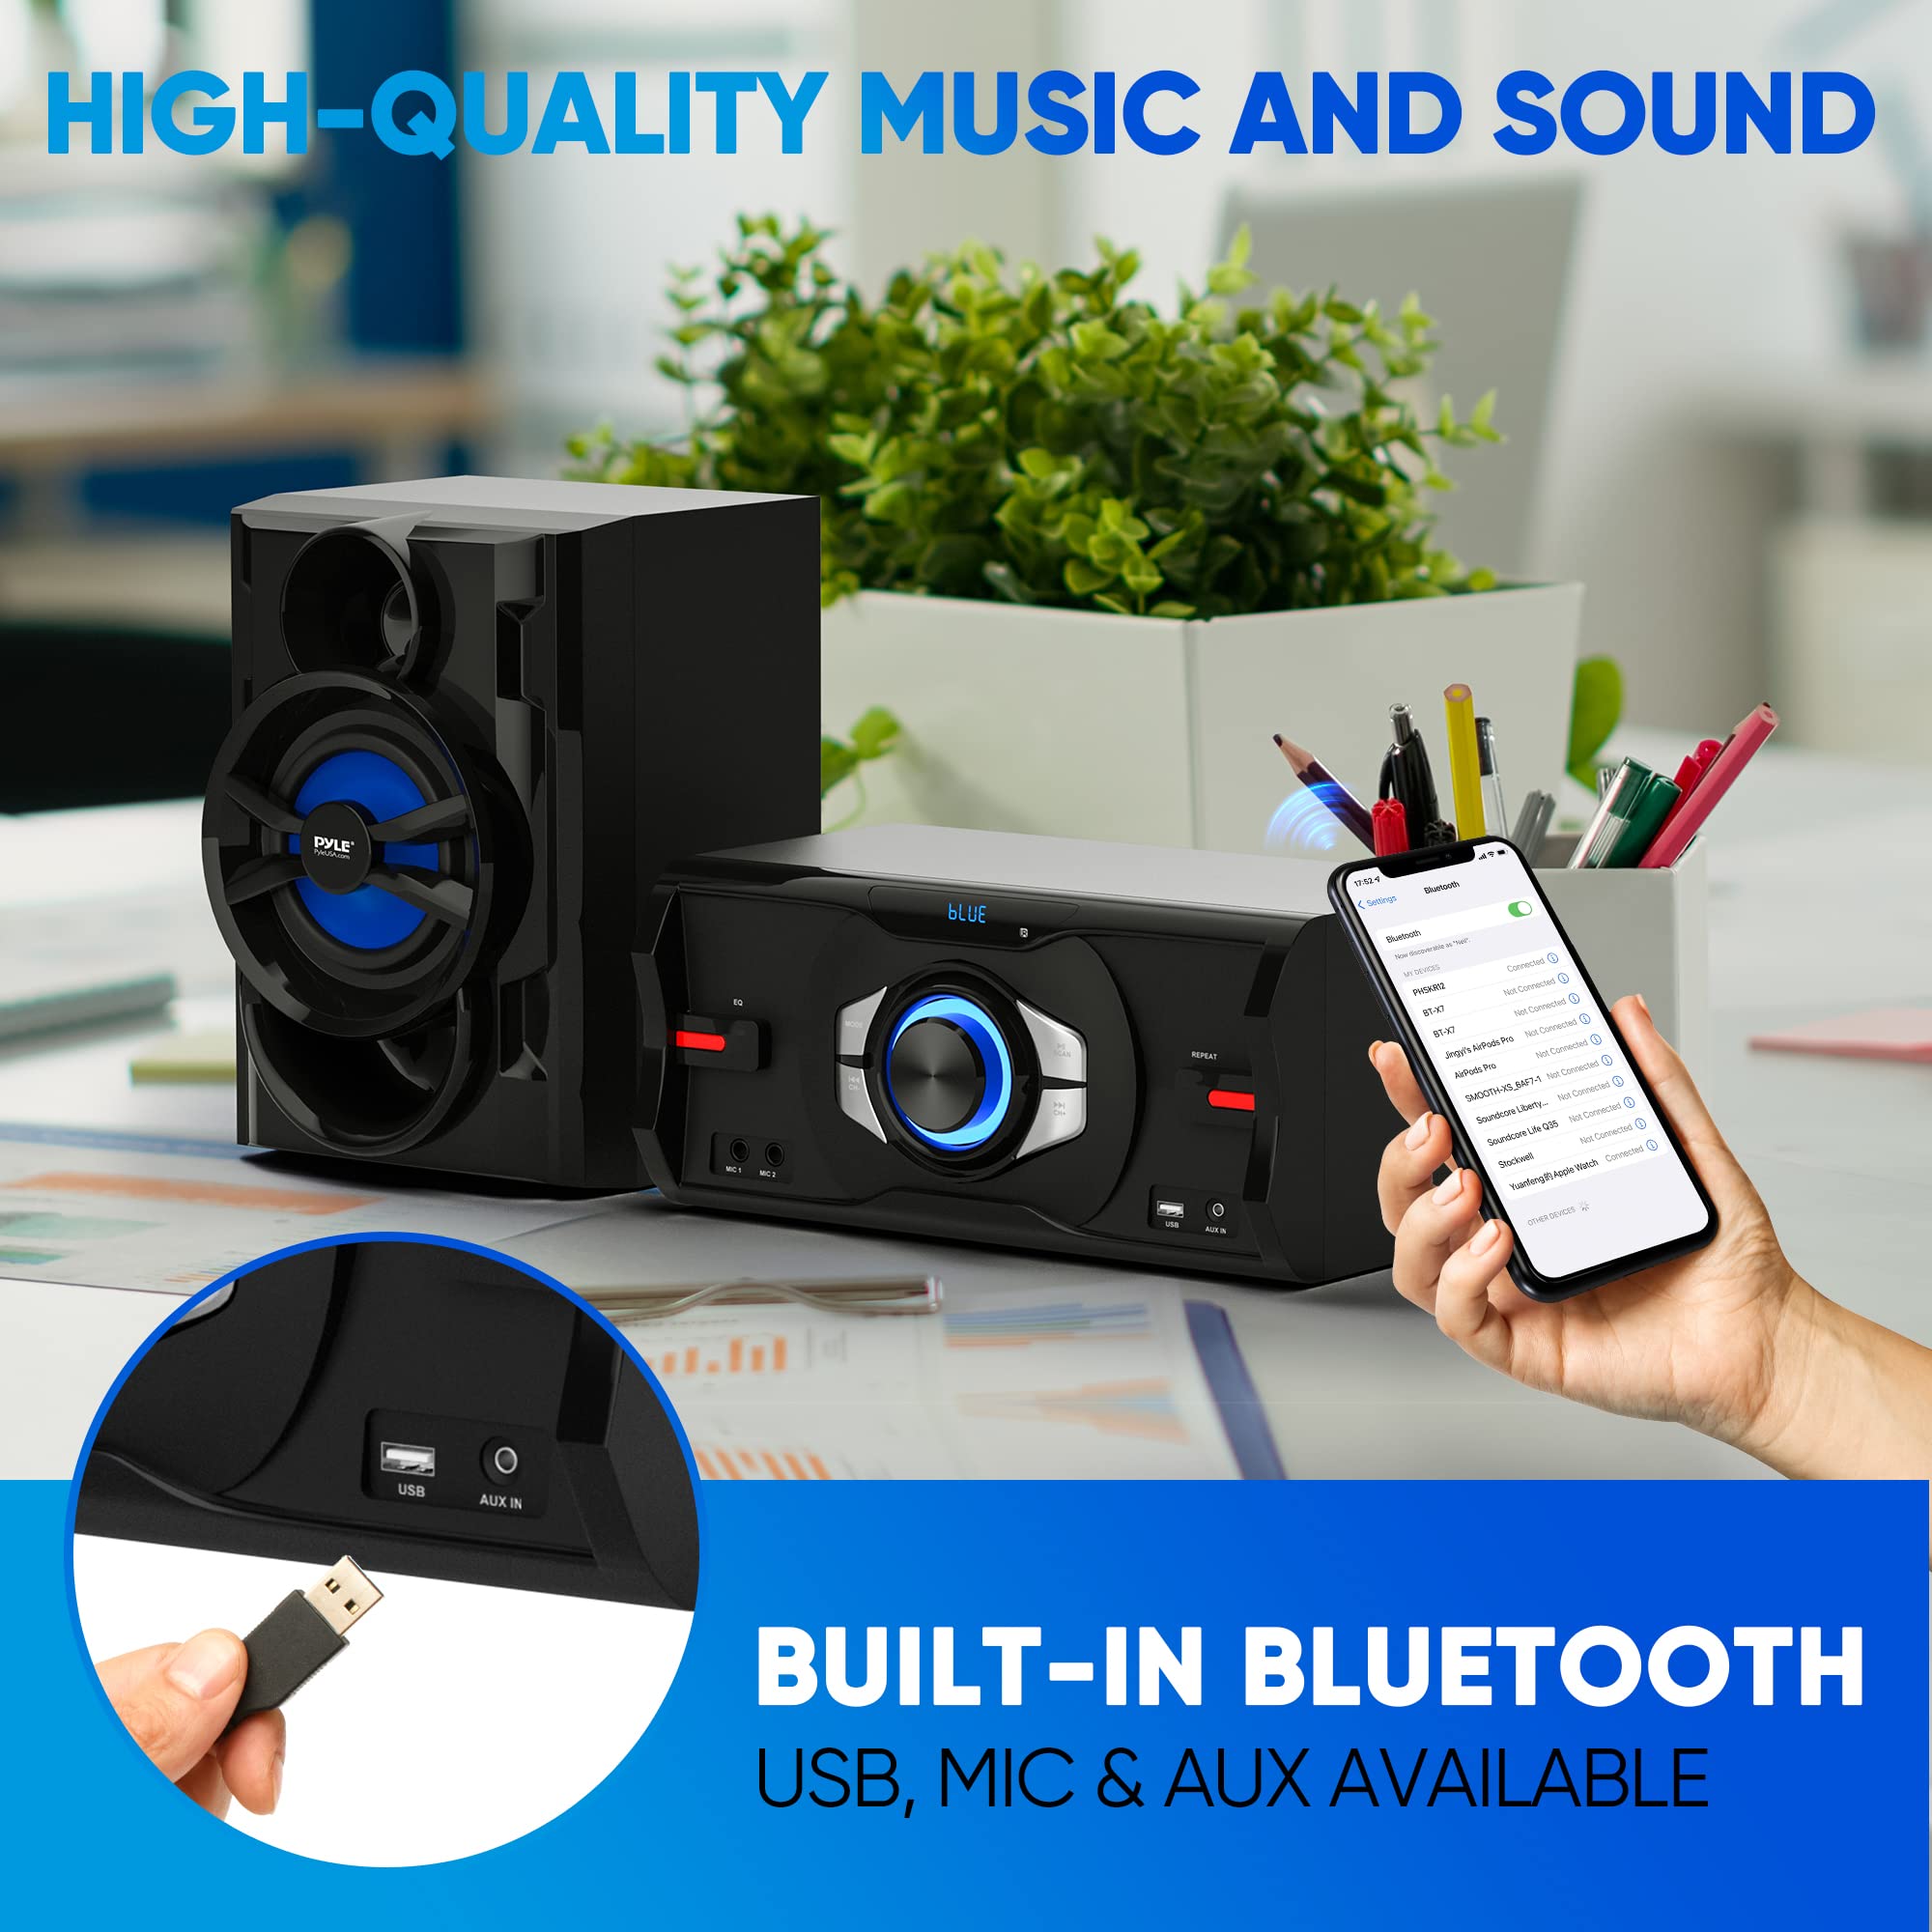 PyleUsa Wireless Bluetooth Stereo Boombox Radio Shelf Mini System - 500 Watt Max Power, Sleek Design for Home with MP3, USB, FM, Aux/2 mic Inputs, EQ, and Remote Control - PHSKR12